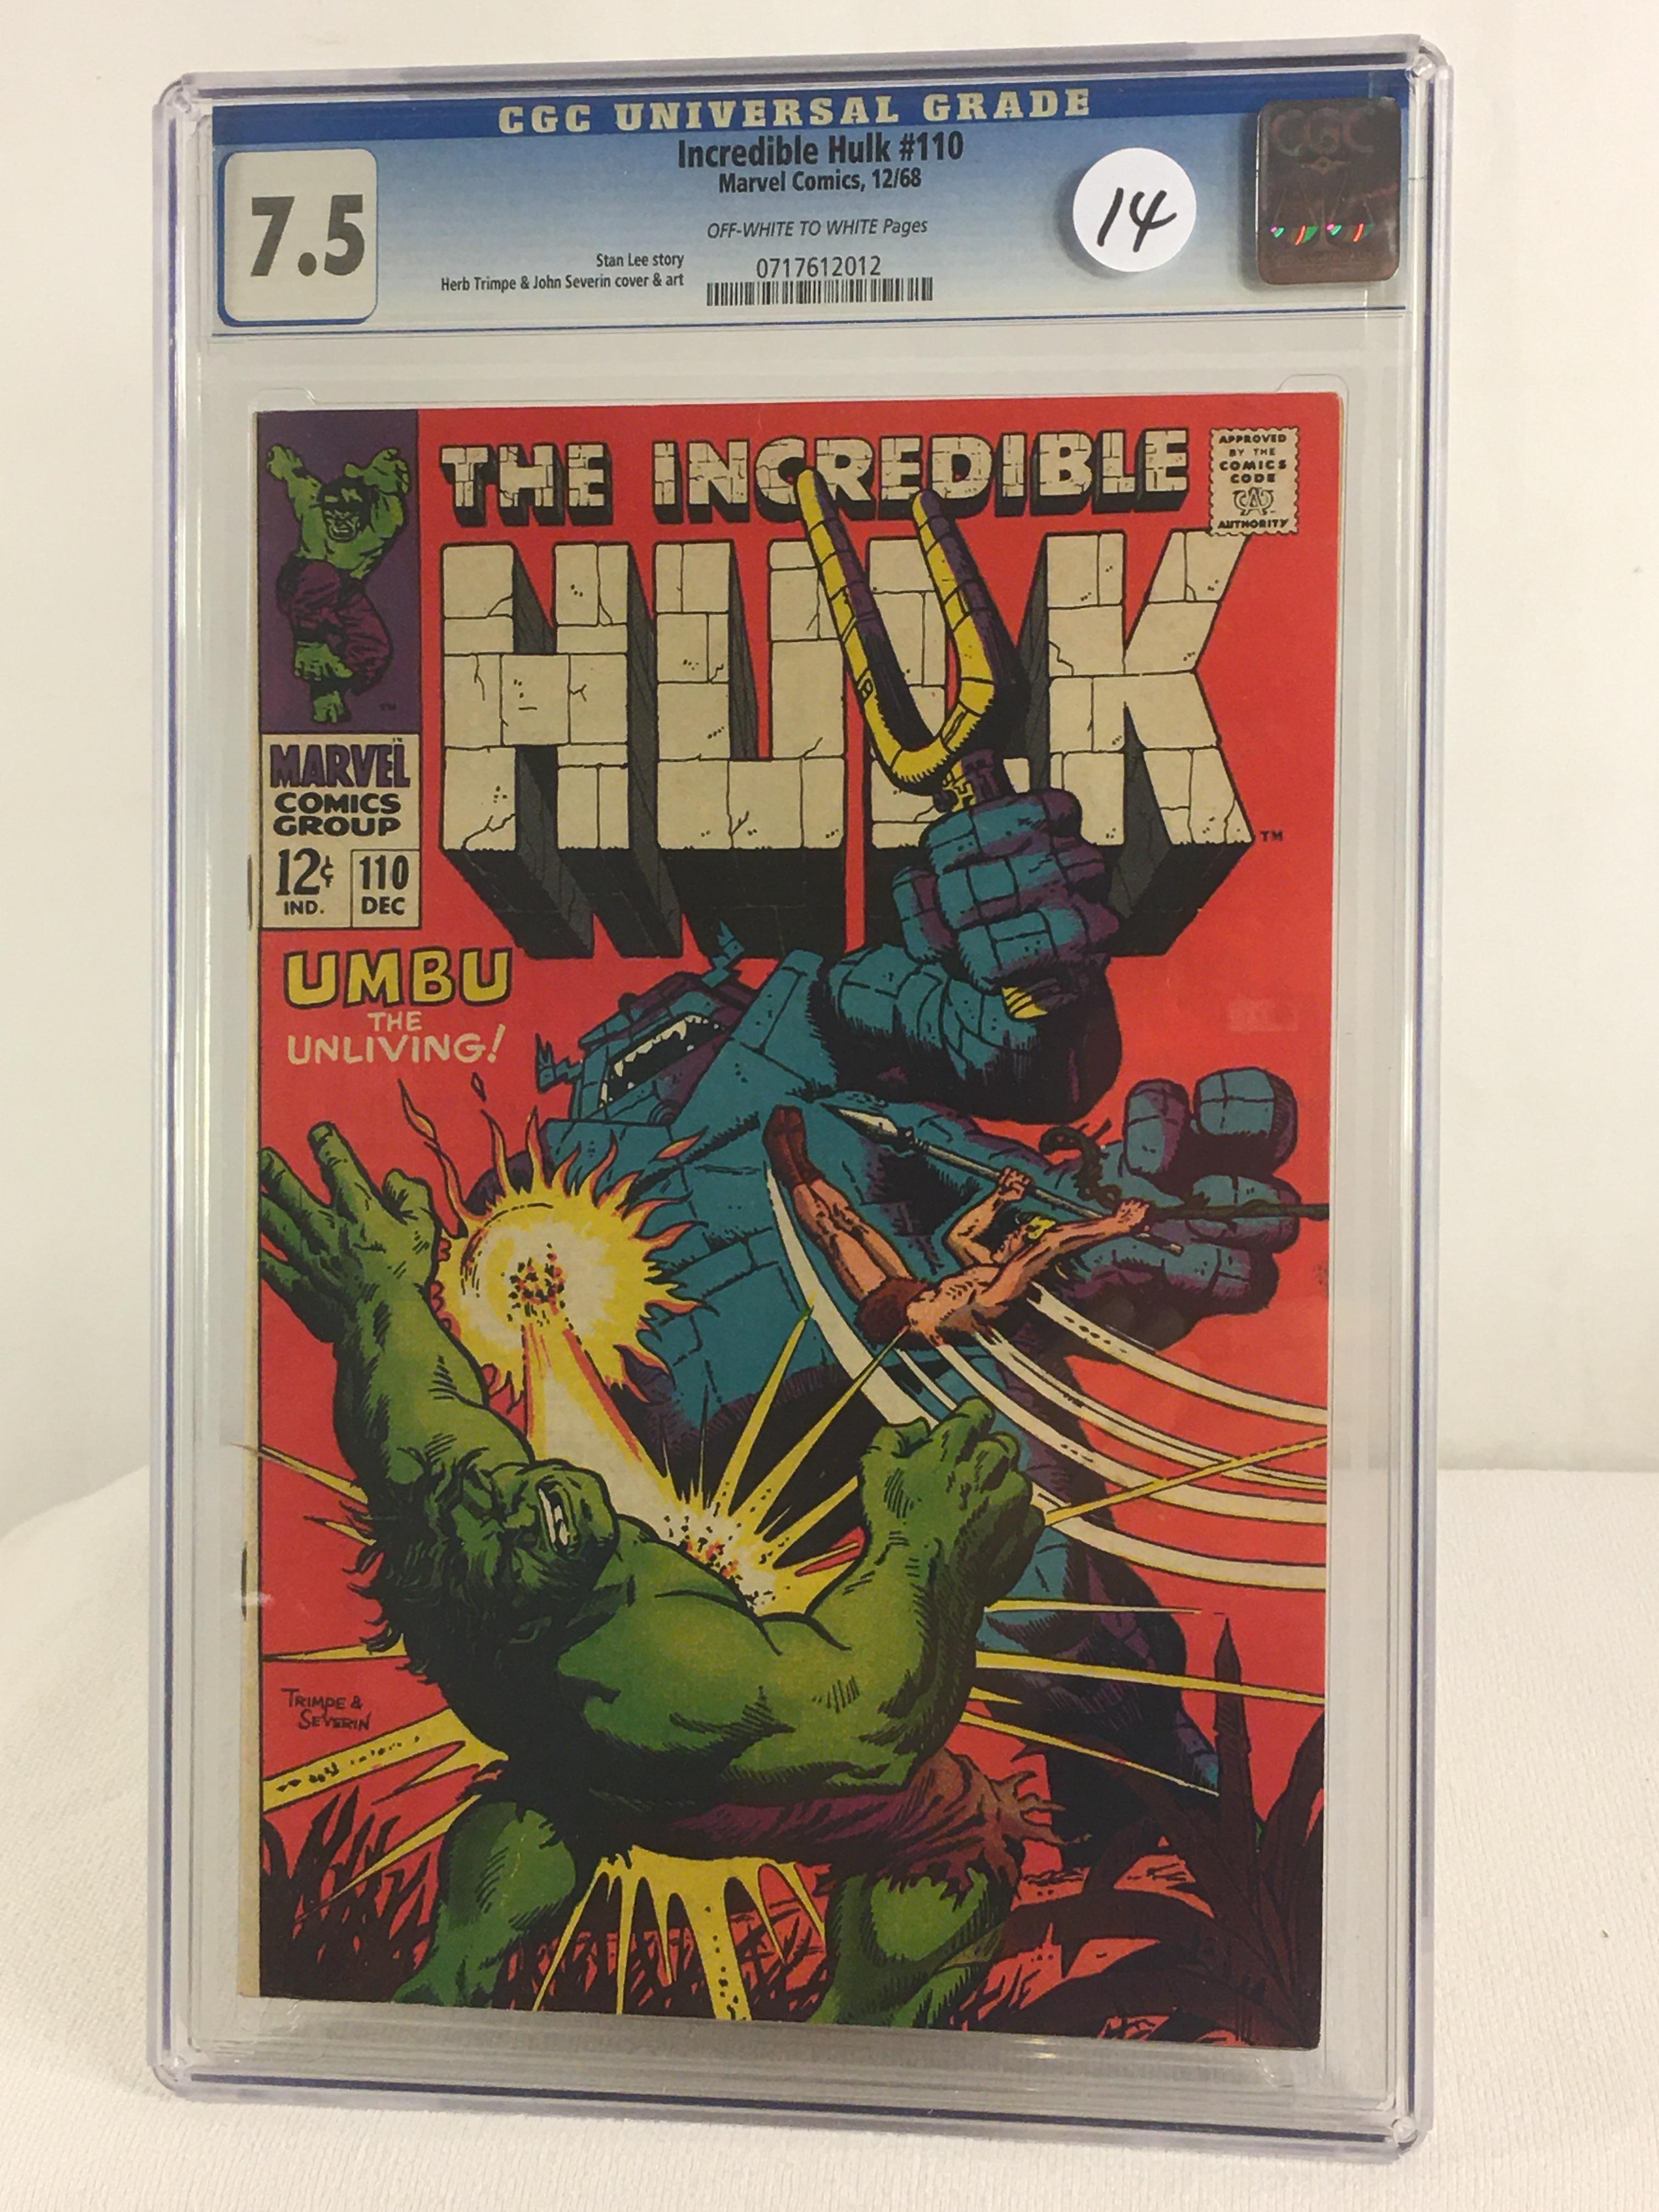 Collector Vintage CGC Universal Grade 7.5 Incredible Hulk #110 Marvel Comics 12/68